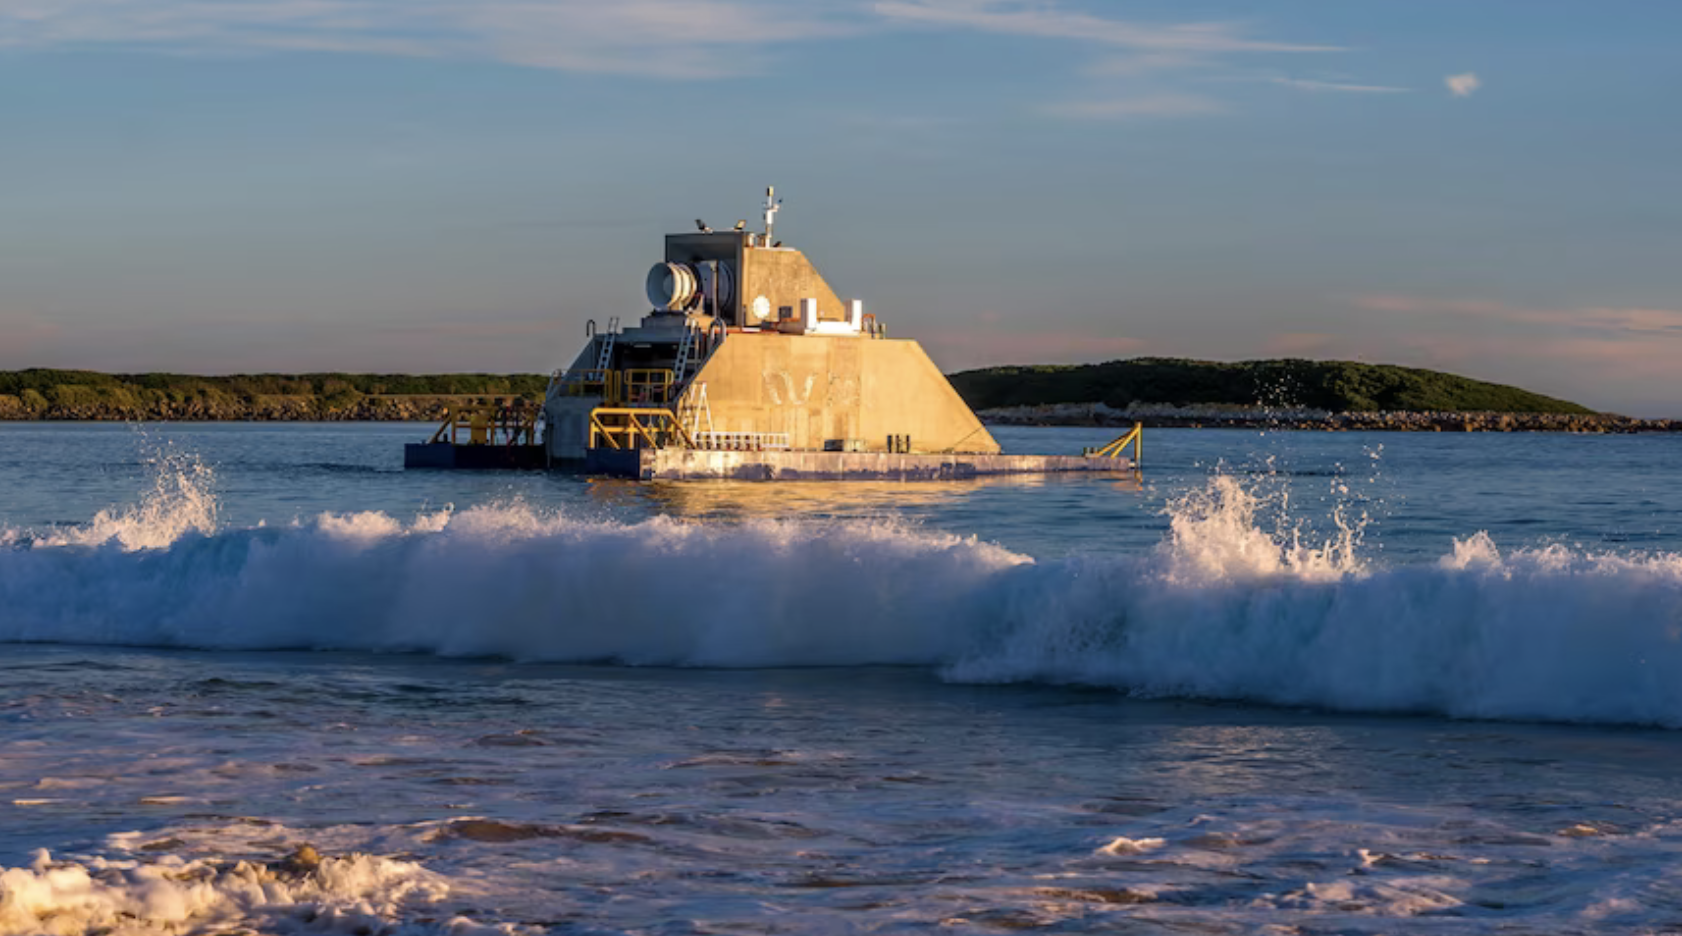 Wave power generators are just one example of renewable ocean energy.